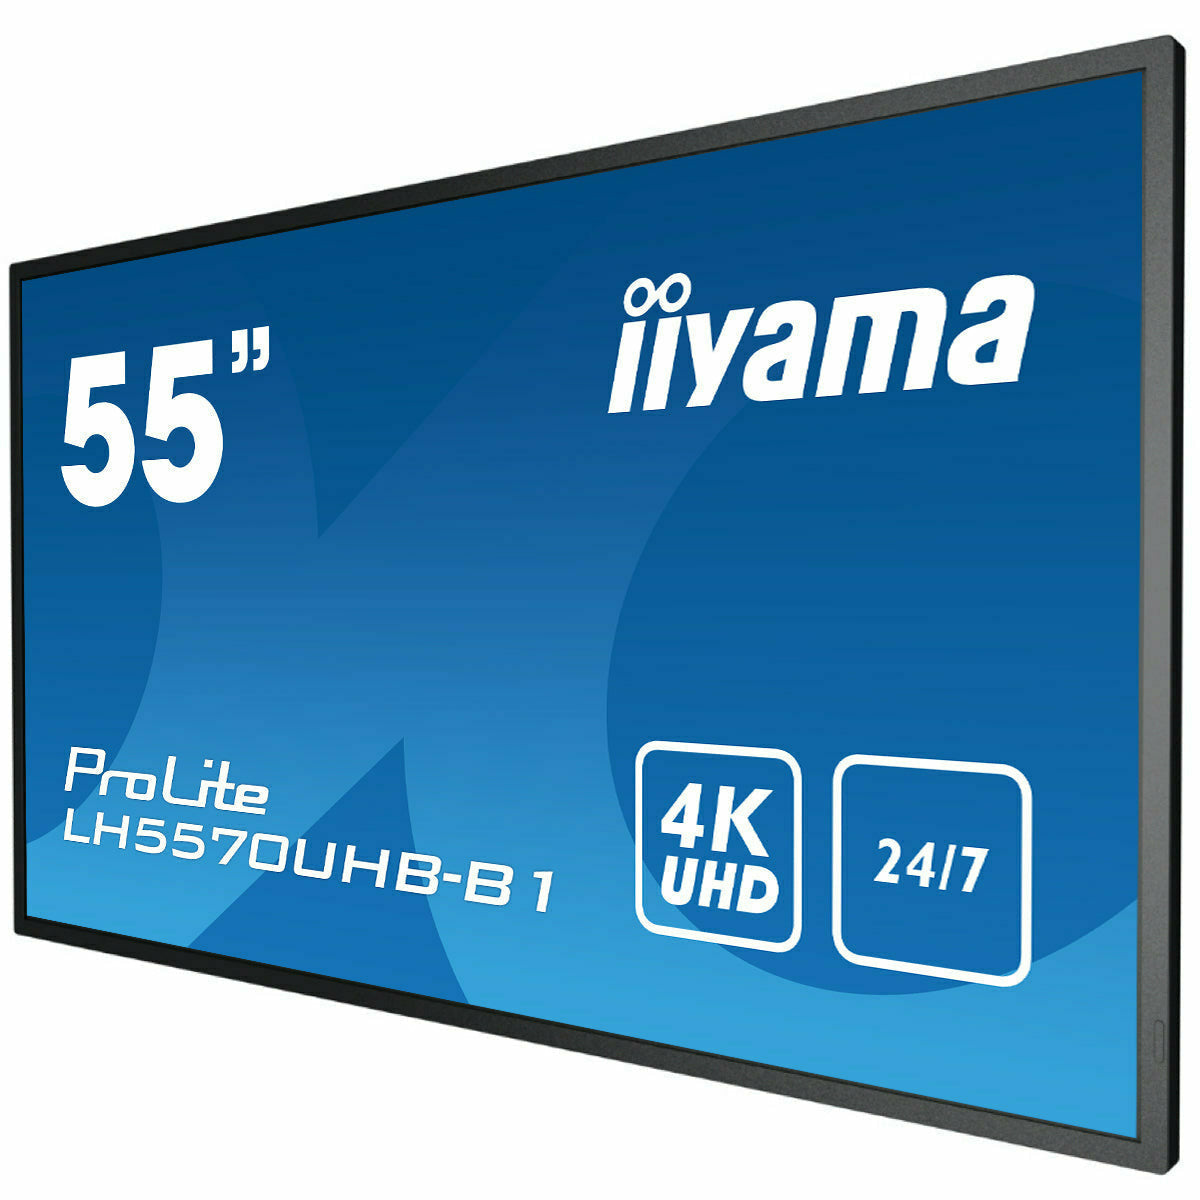 iiyama ProLite LH5570UHB-B1 55" Large Format Display with 24/7, 4K UHD, Android 9.0 and 700cd/m² High Brightness